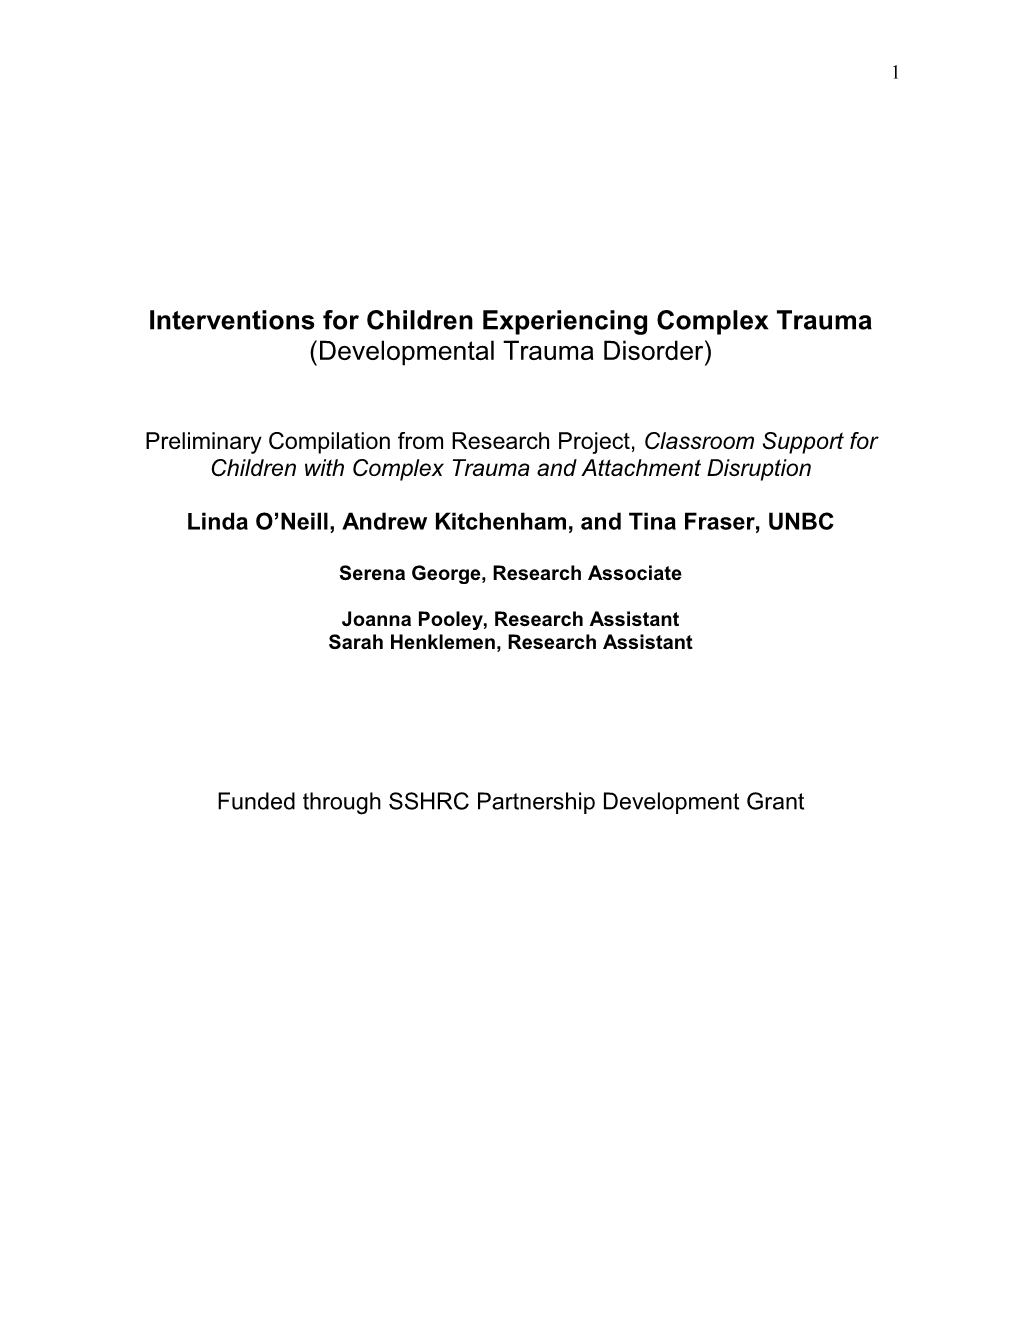 Interventions for Children Experiencing Complex Trauma (Developmental Trauma Disorder)